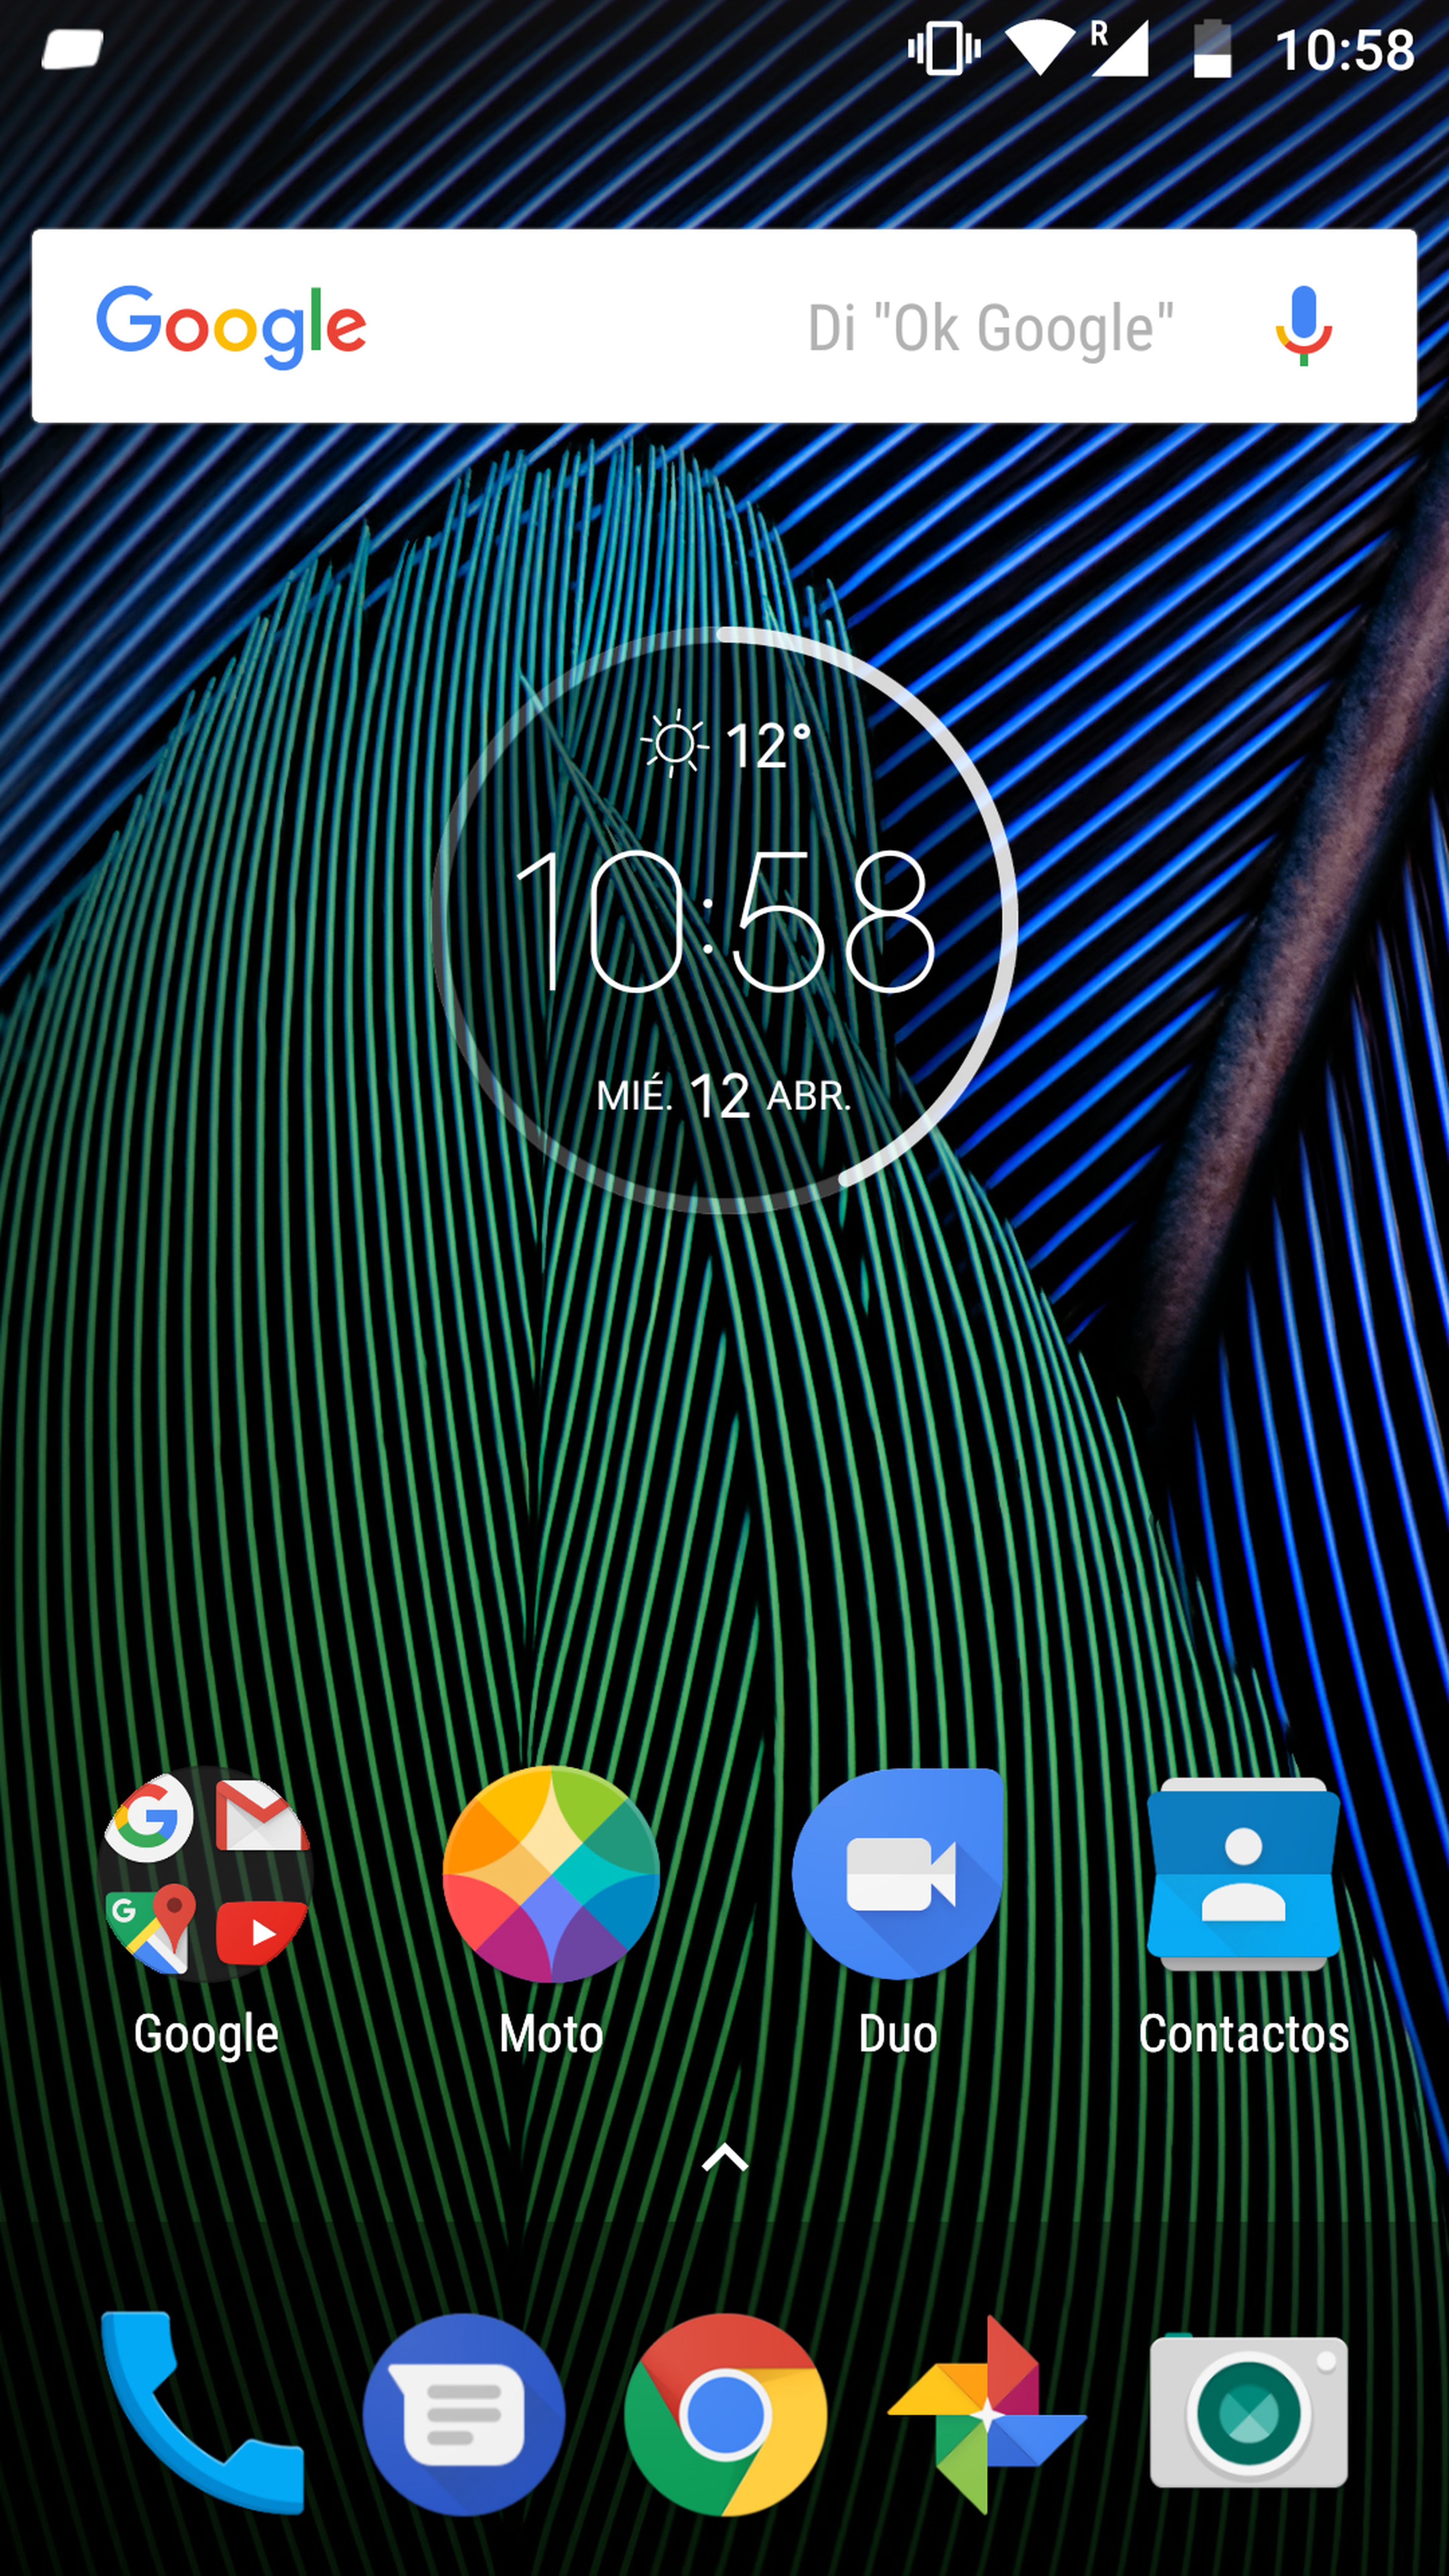 La pantalla principal del Moto G5 Plus